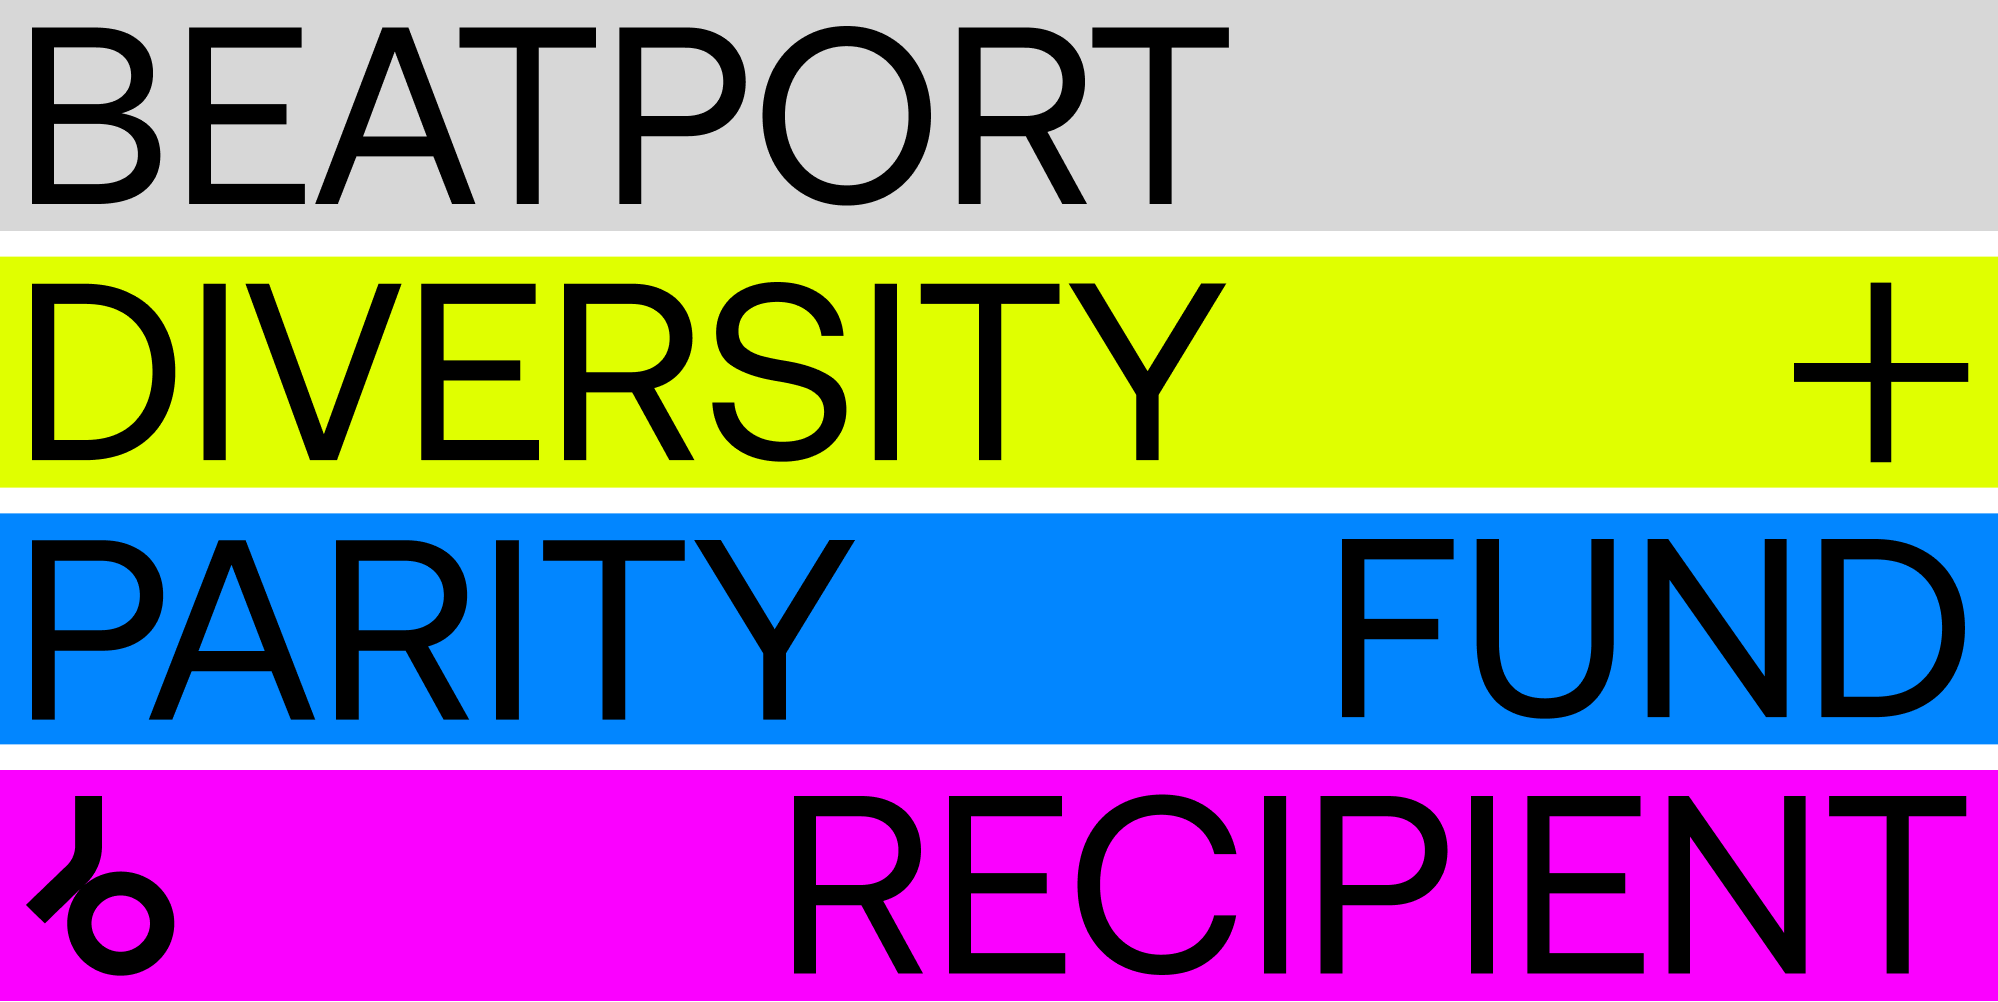 Beatport Diversity + Parity Fund